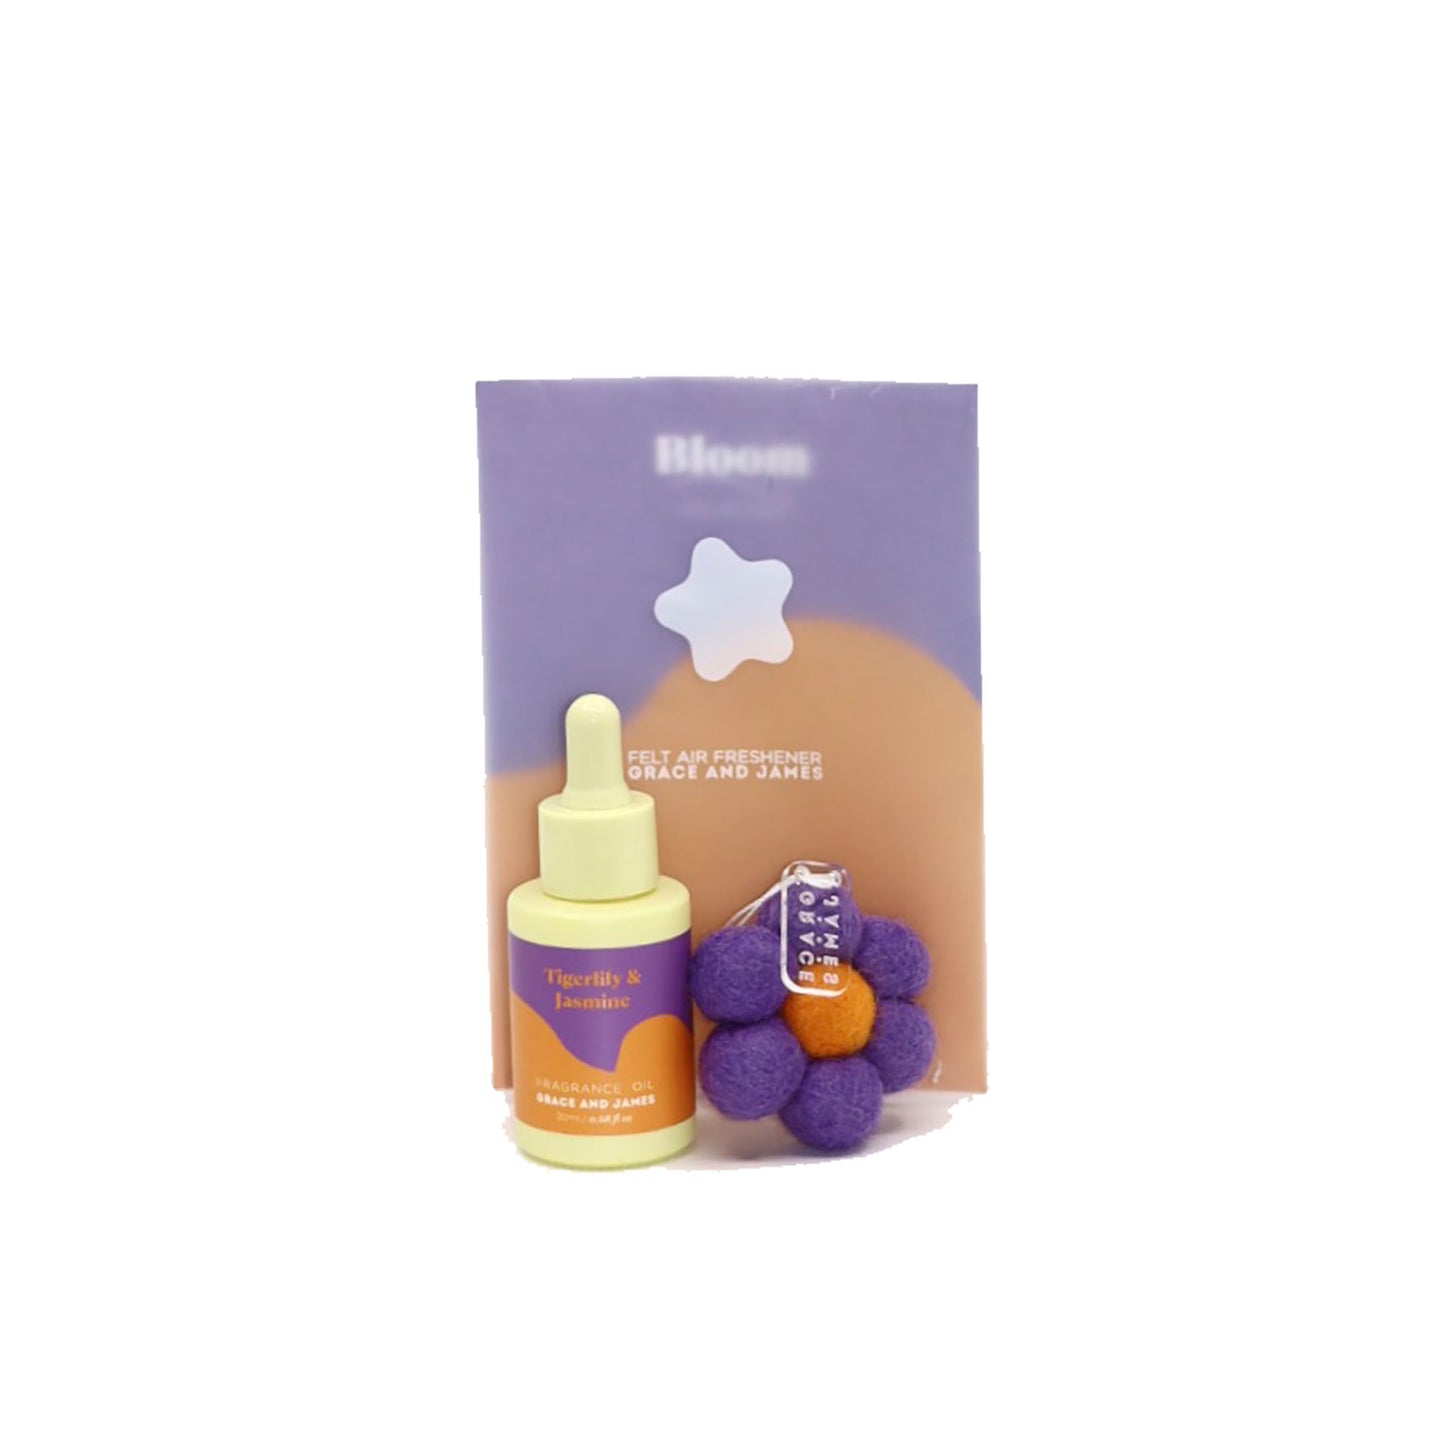 Bloom Collection | Tigerlily & Jasmine Felt Air Freshener